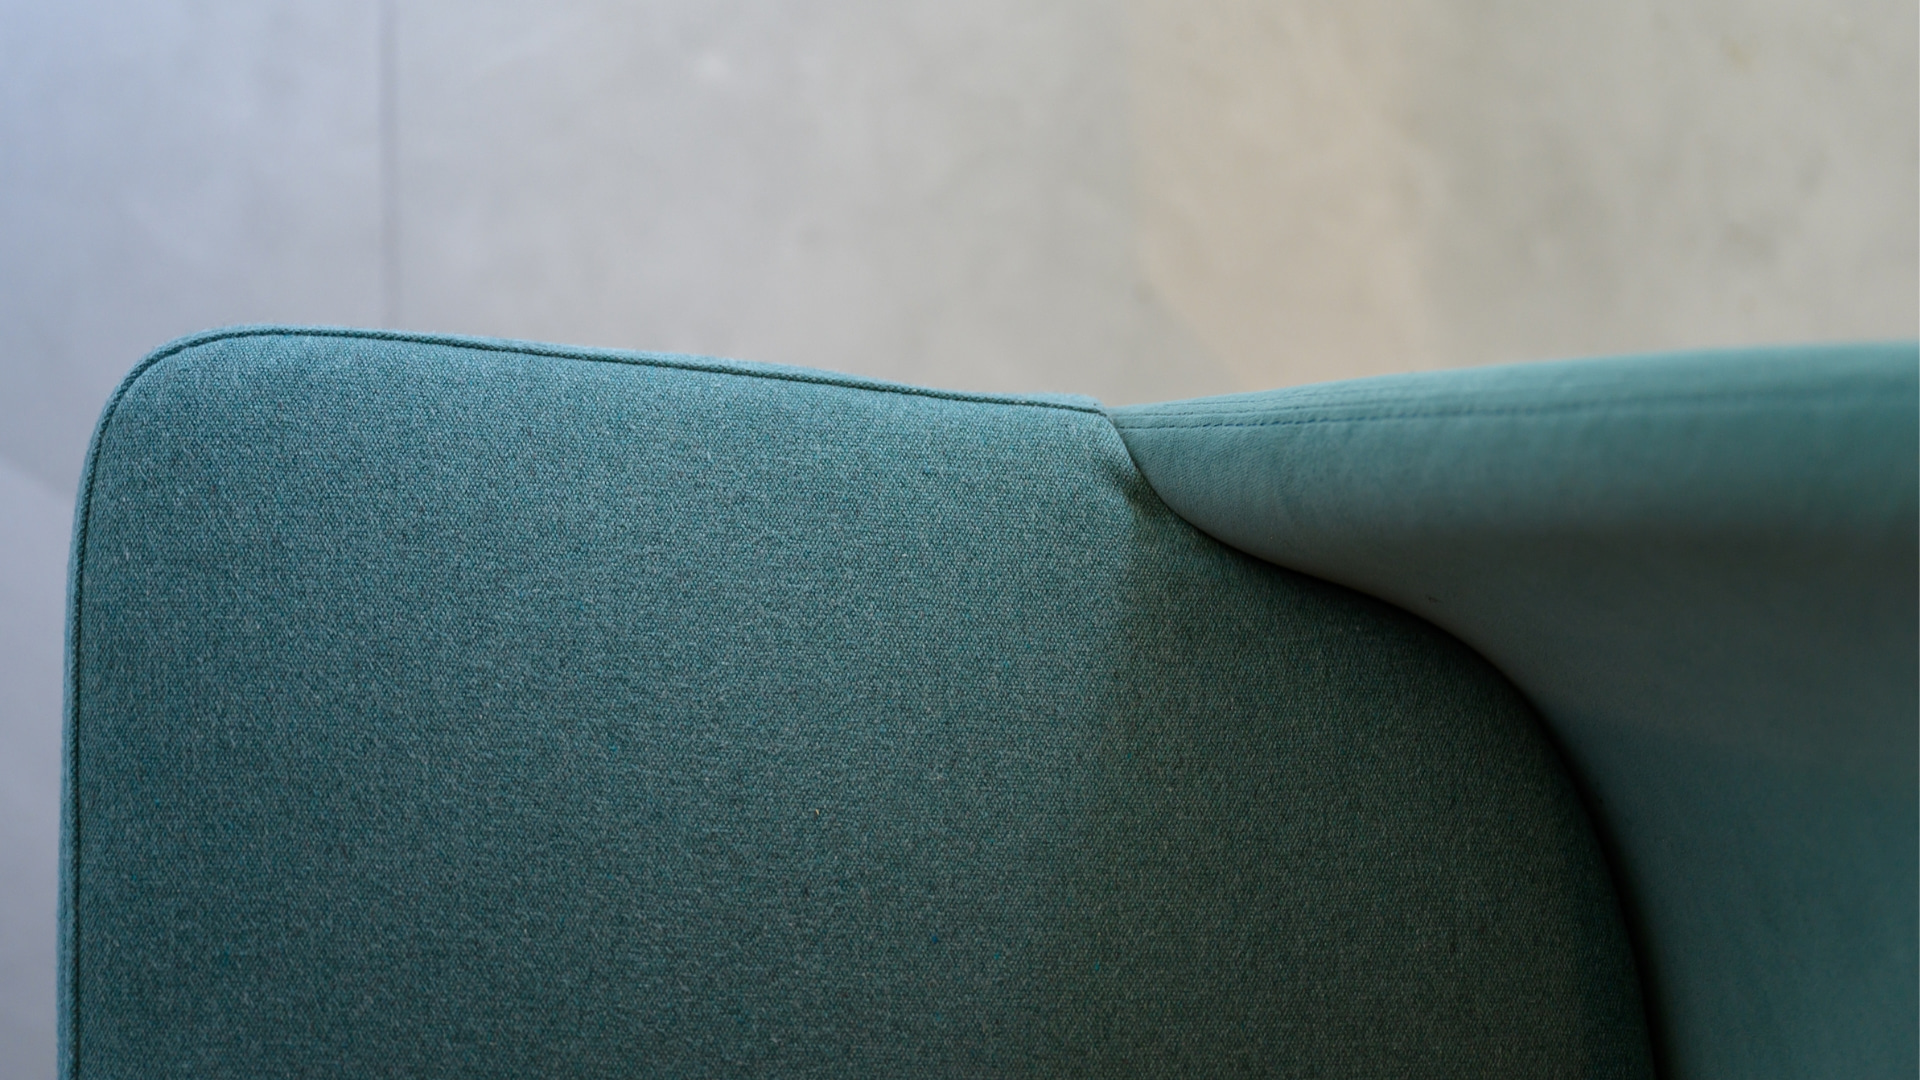 AMA SE01 Variante, dettaglio della seduta, tessuto blu su sfondo neutro